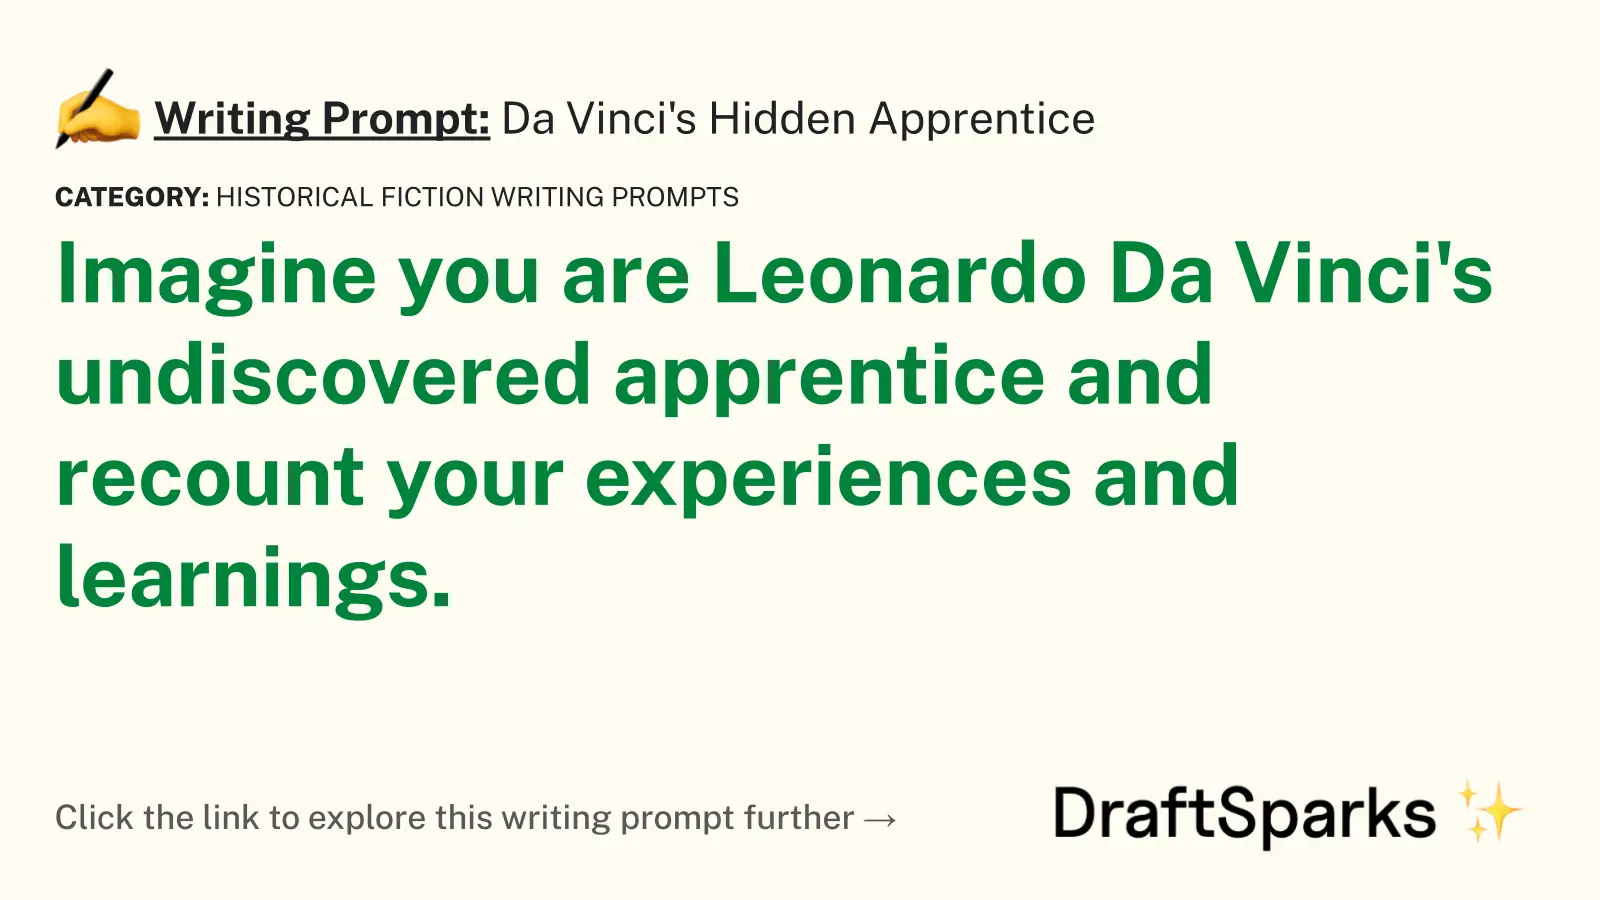 Da Vinci’s Hidden Apprentice